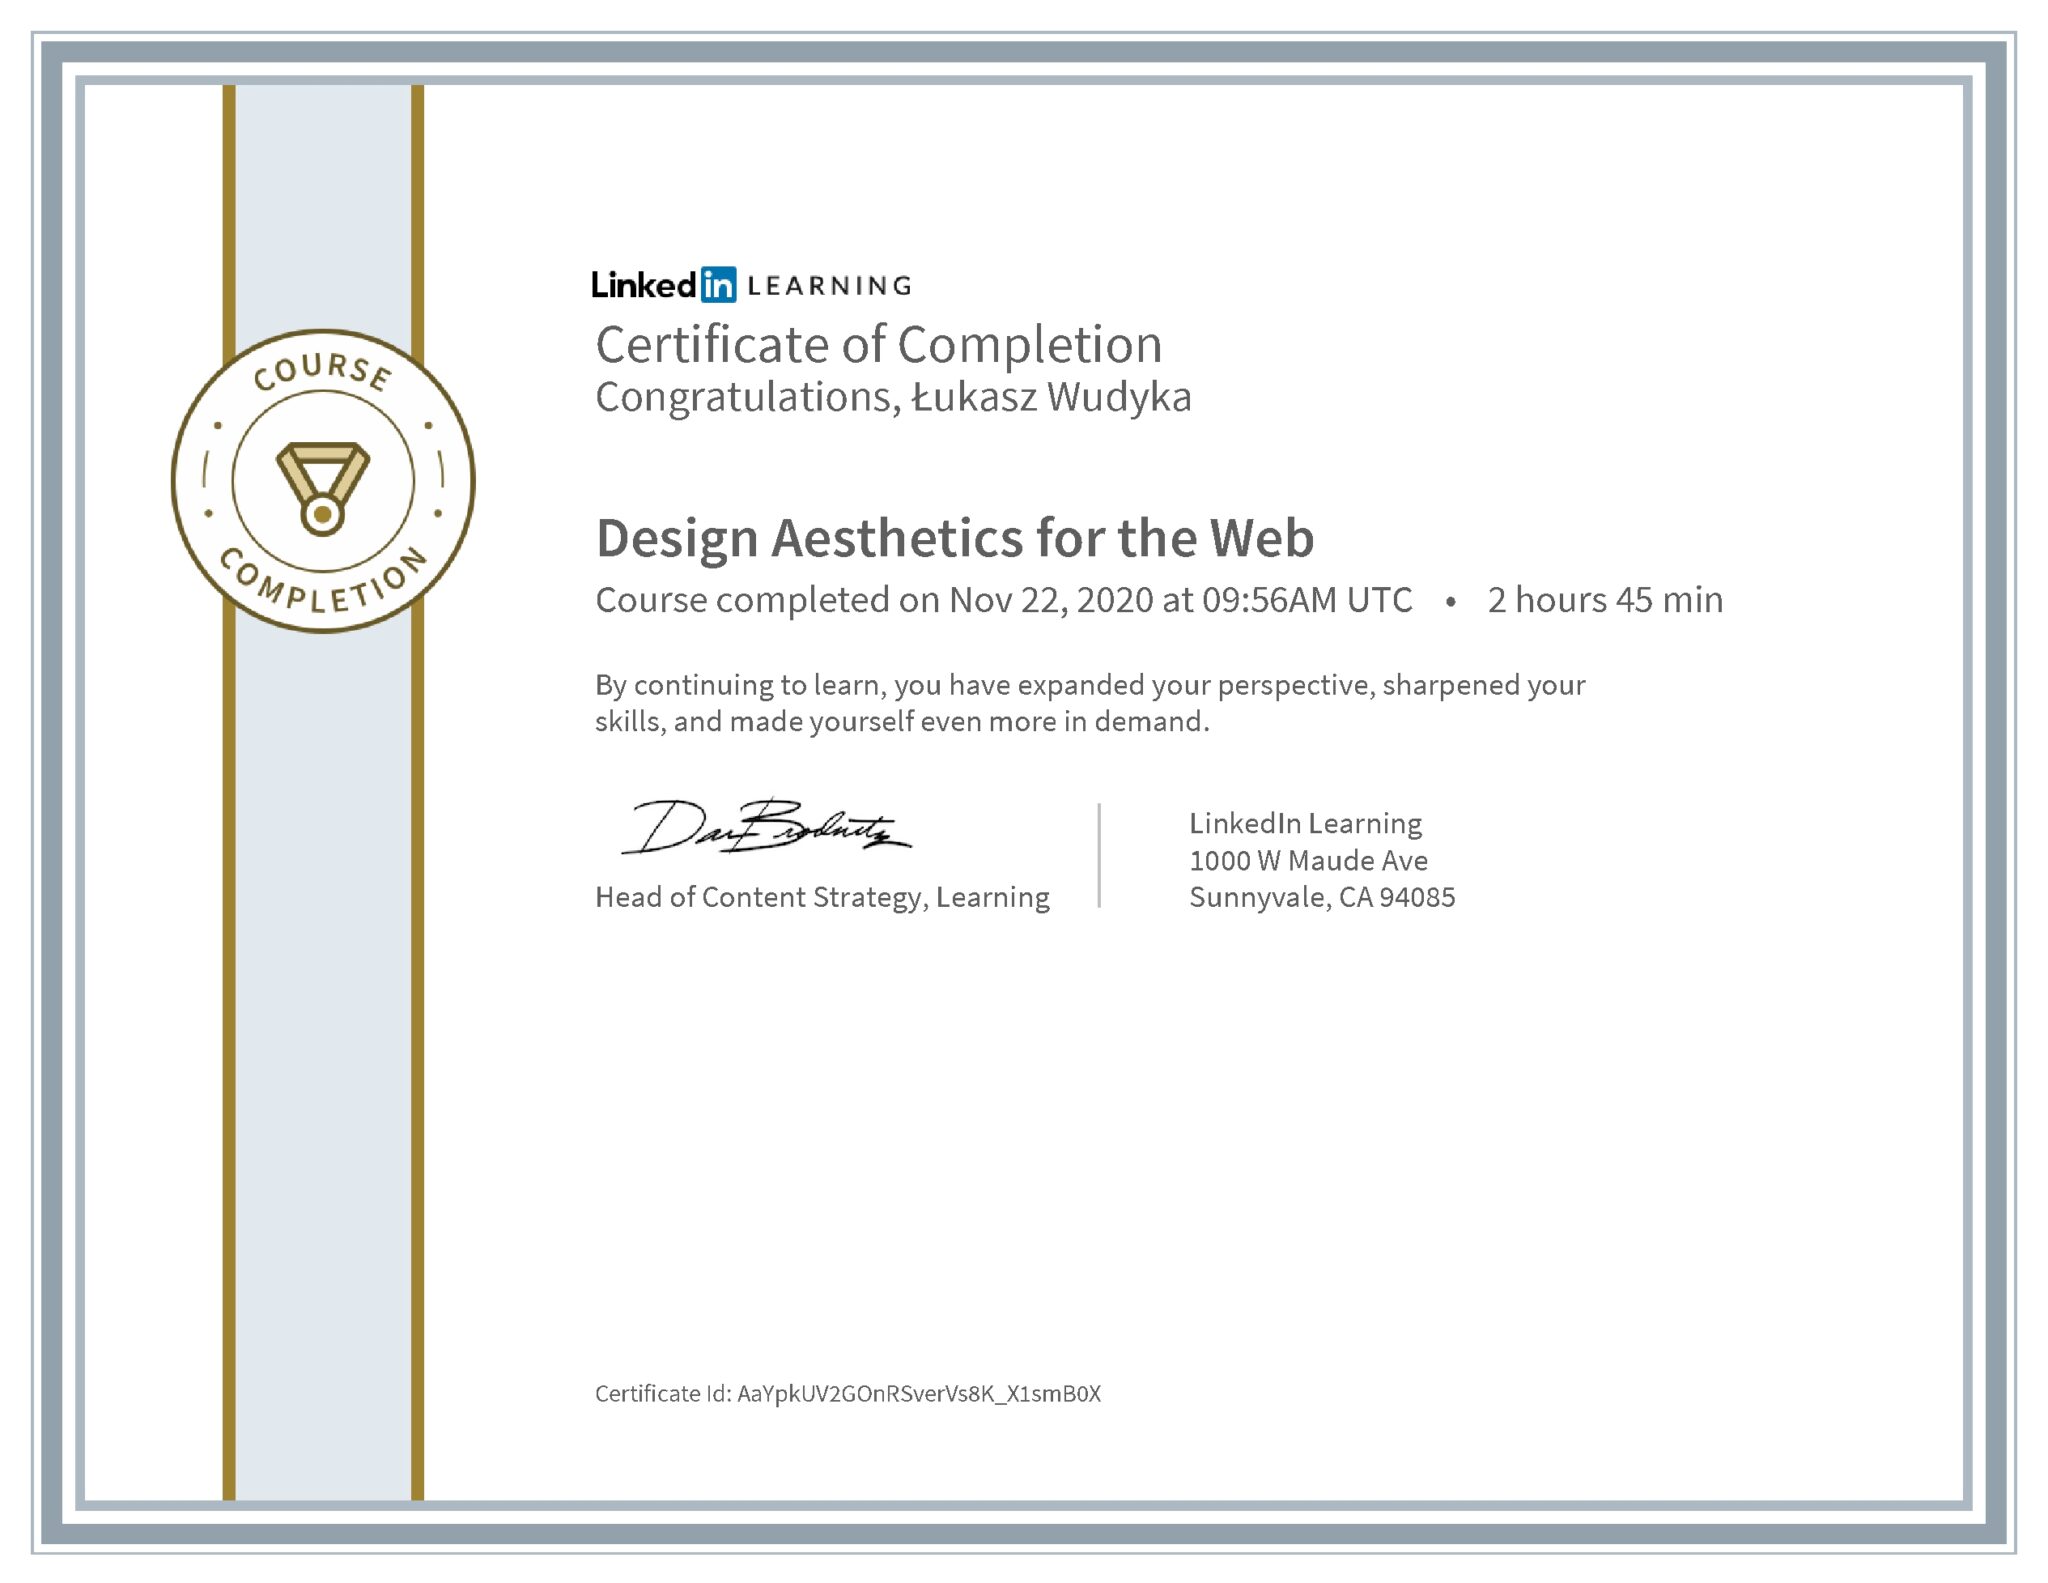 Łukasz Wudyka certyfikat LinkedIn Design Aesthetics for the Web